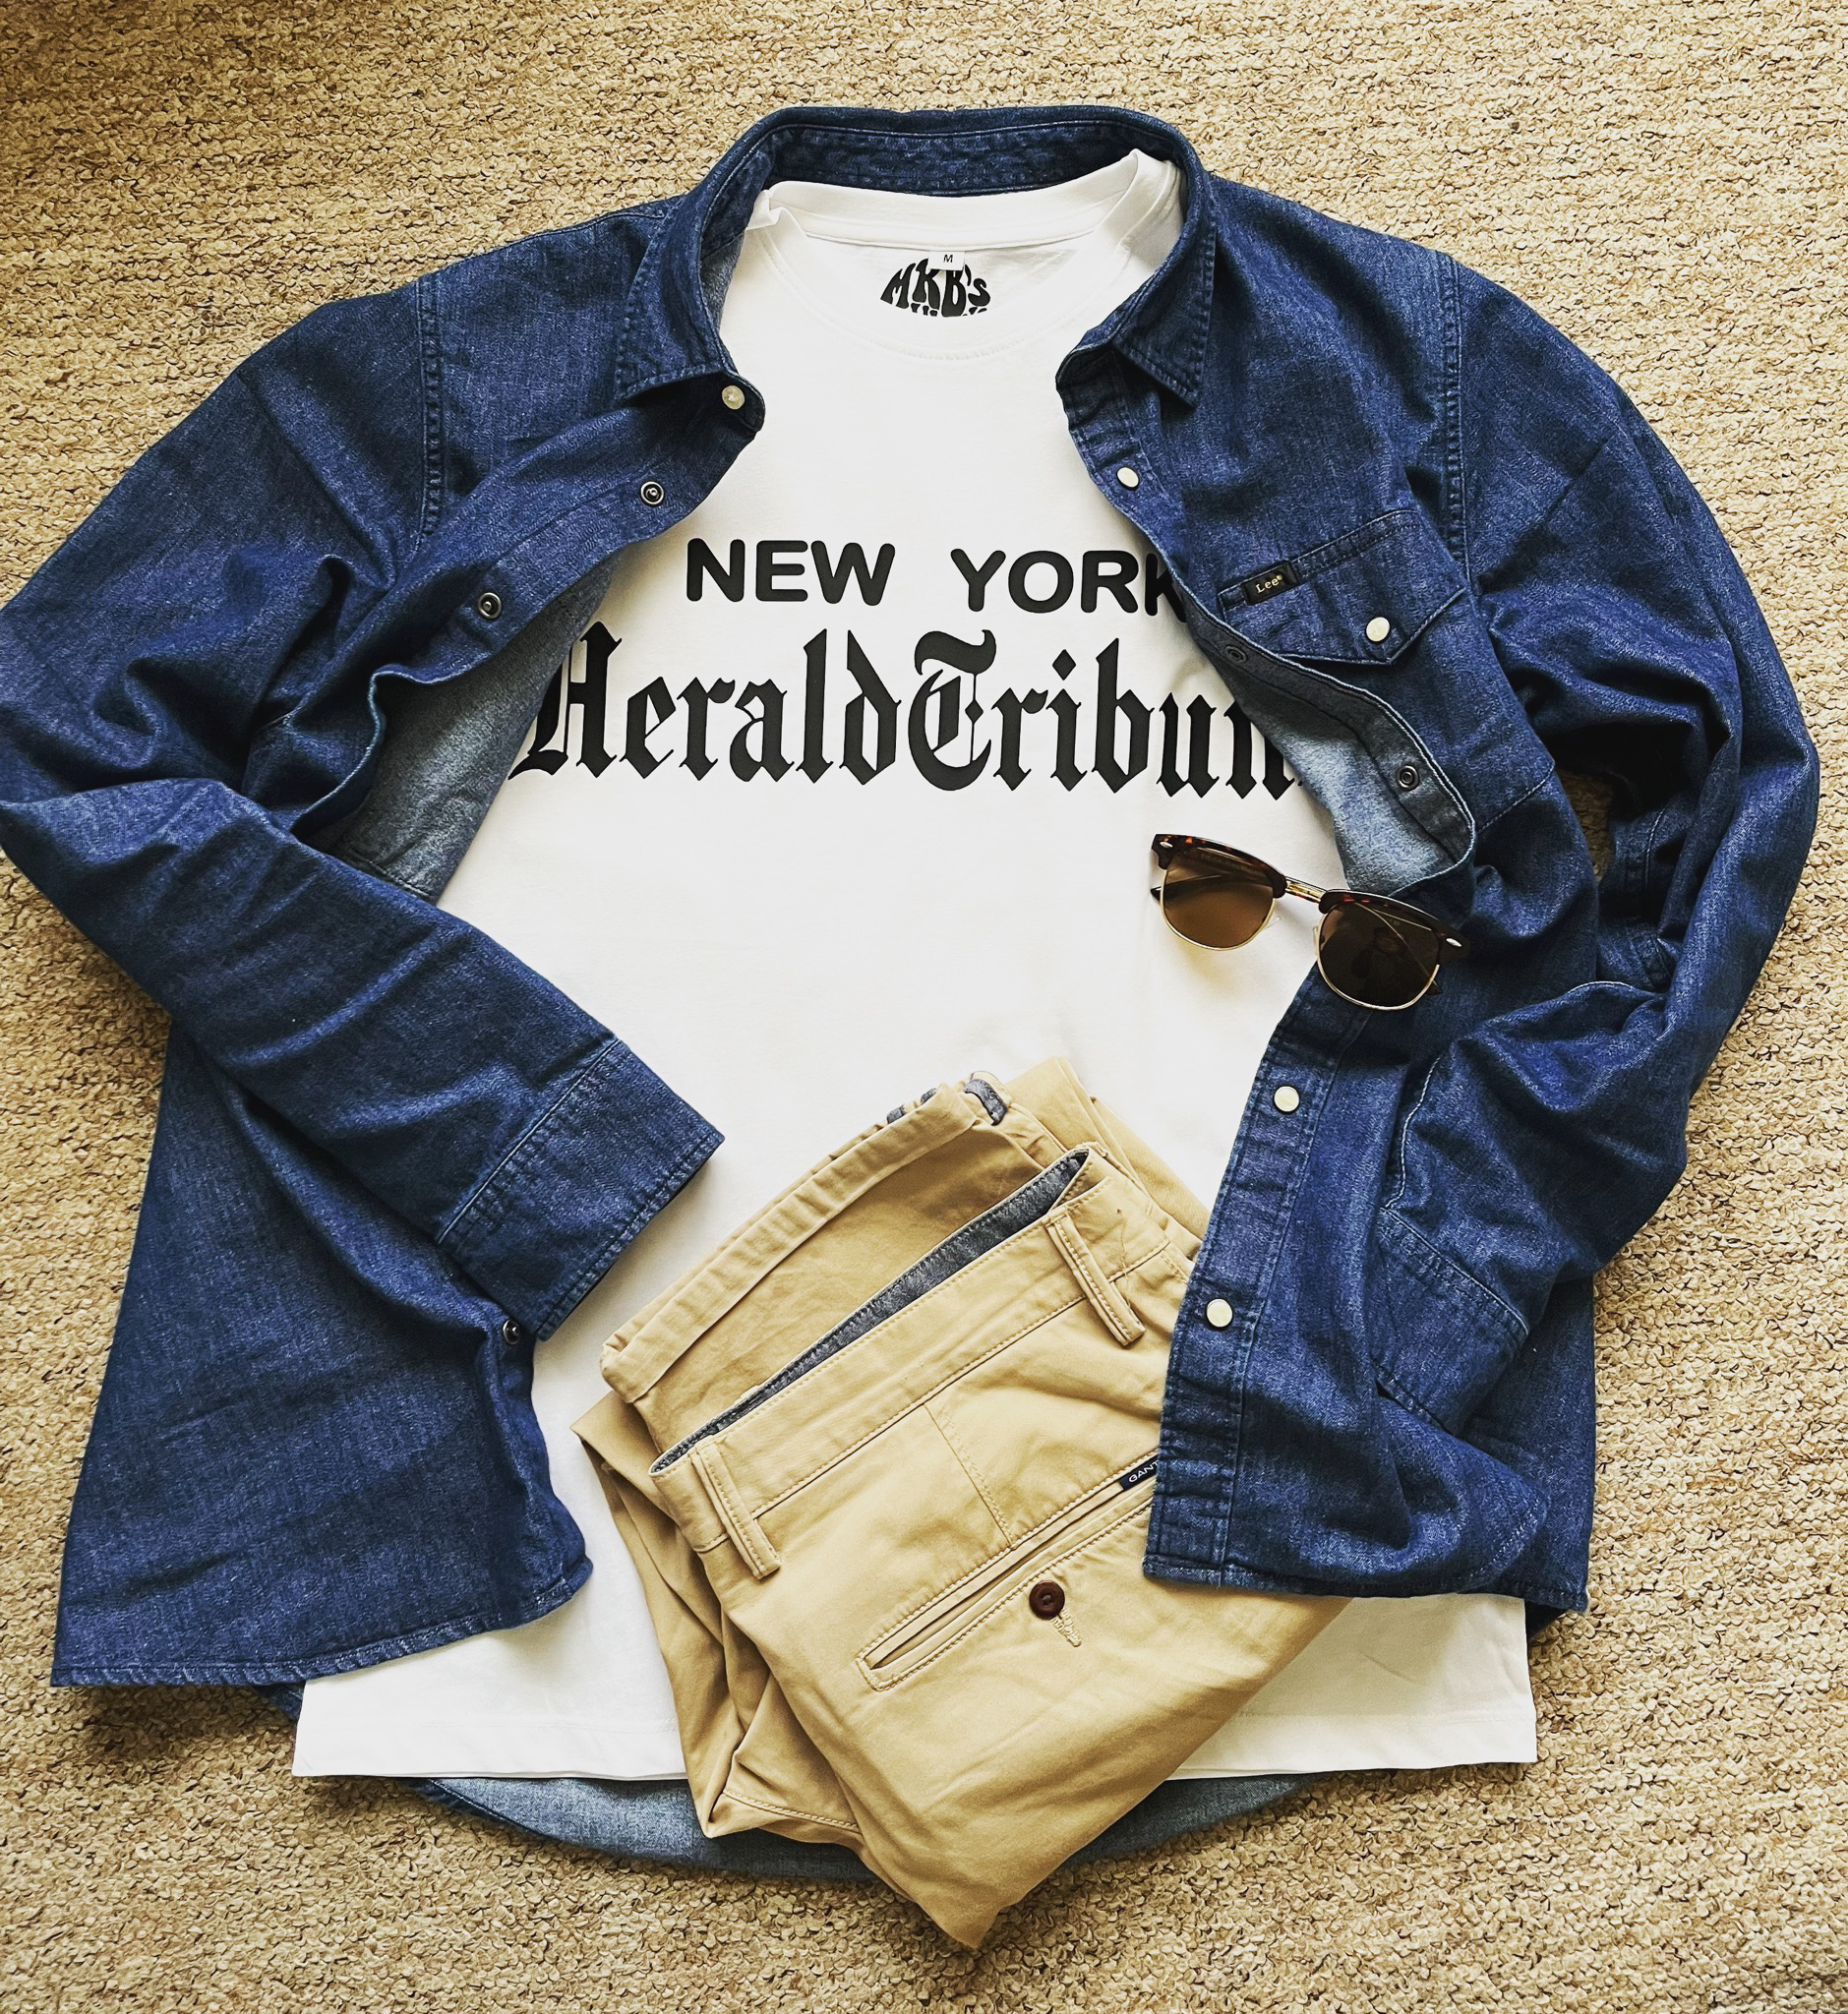 Habubu Exitoso enviar New York Herald Tribune Organic Cotton T-Shirt